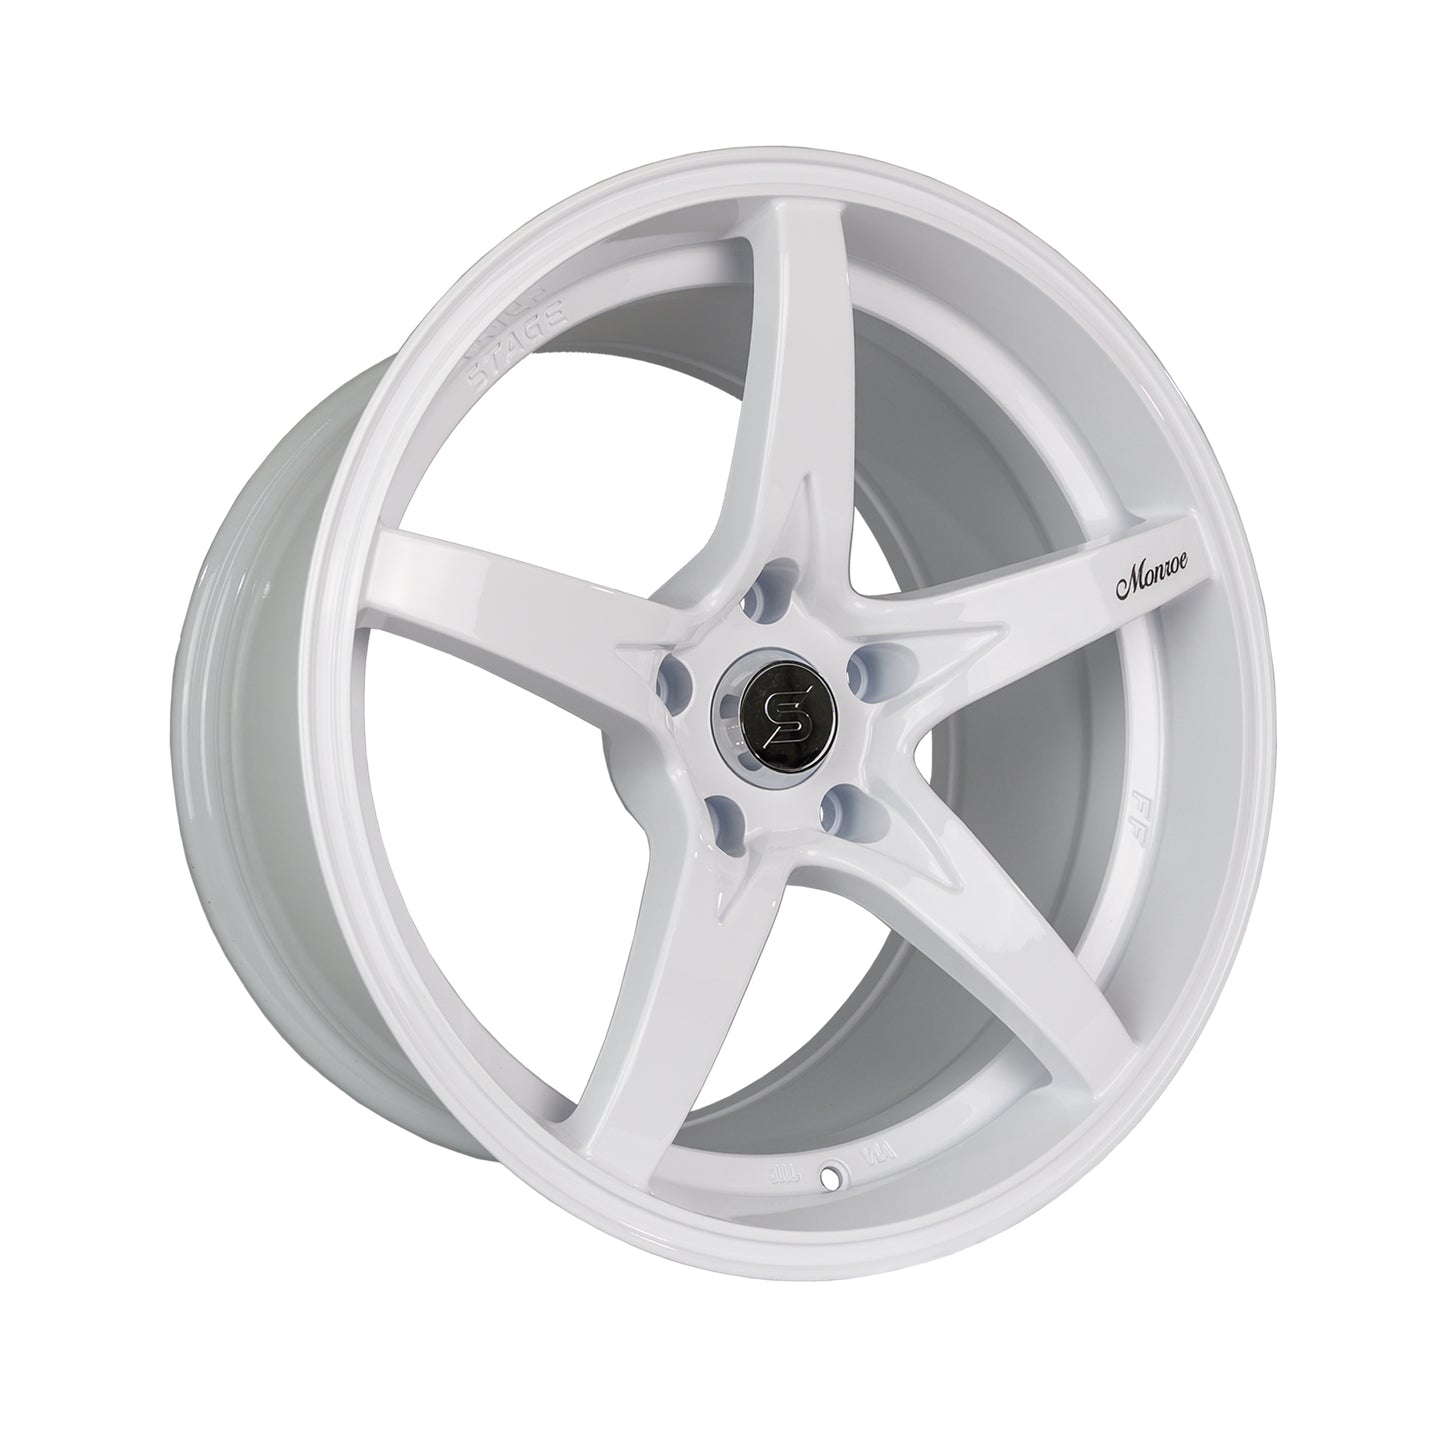 Stage Wheels Monroe 18x9 +22mm 5x100 CB: 73.1 Color: White